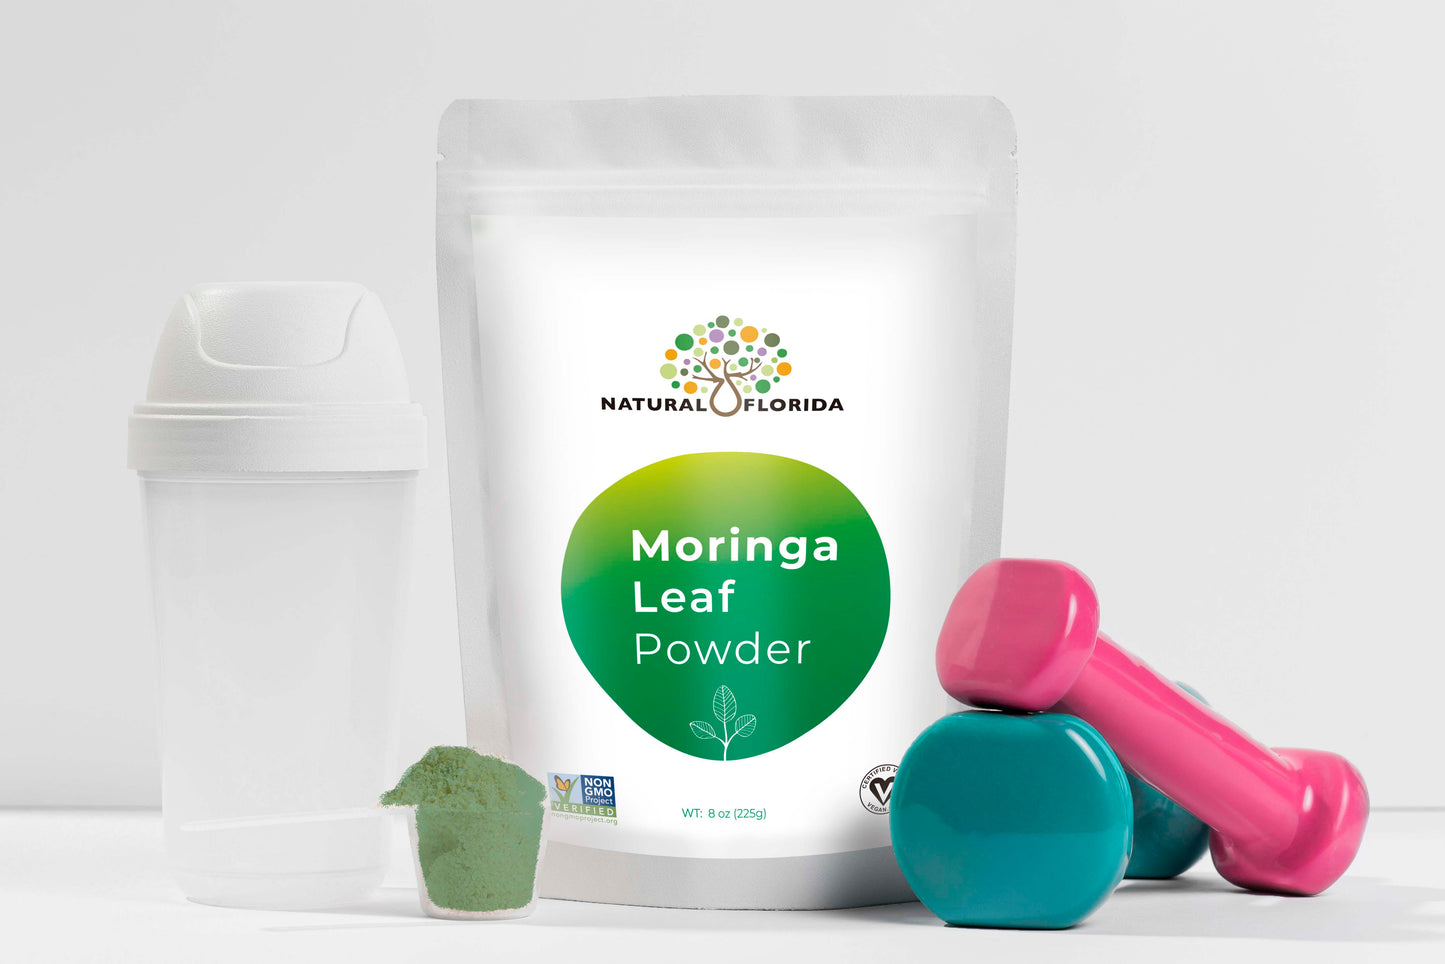 Benefits of Moringa Leaf Powder. Natural Florida